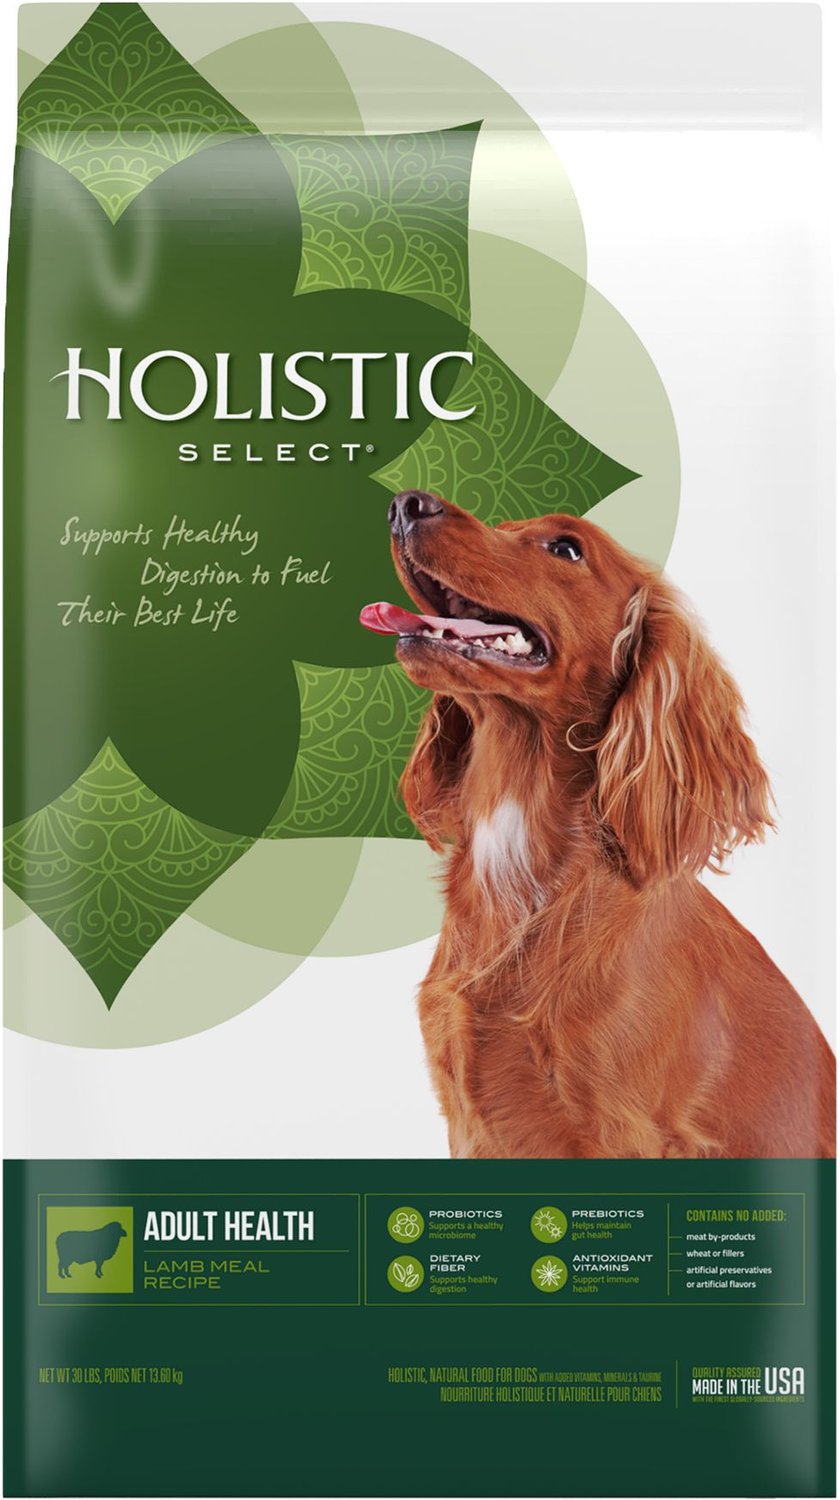 Holistic Select dog food Photo